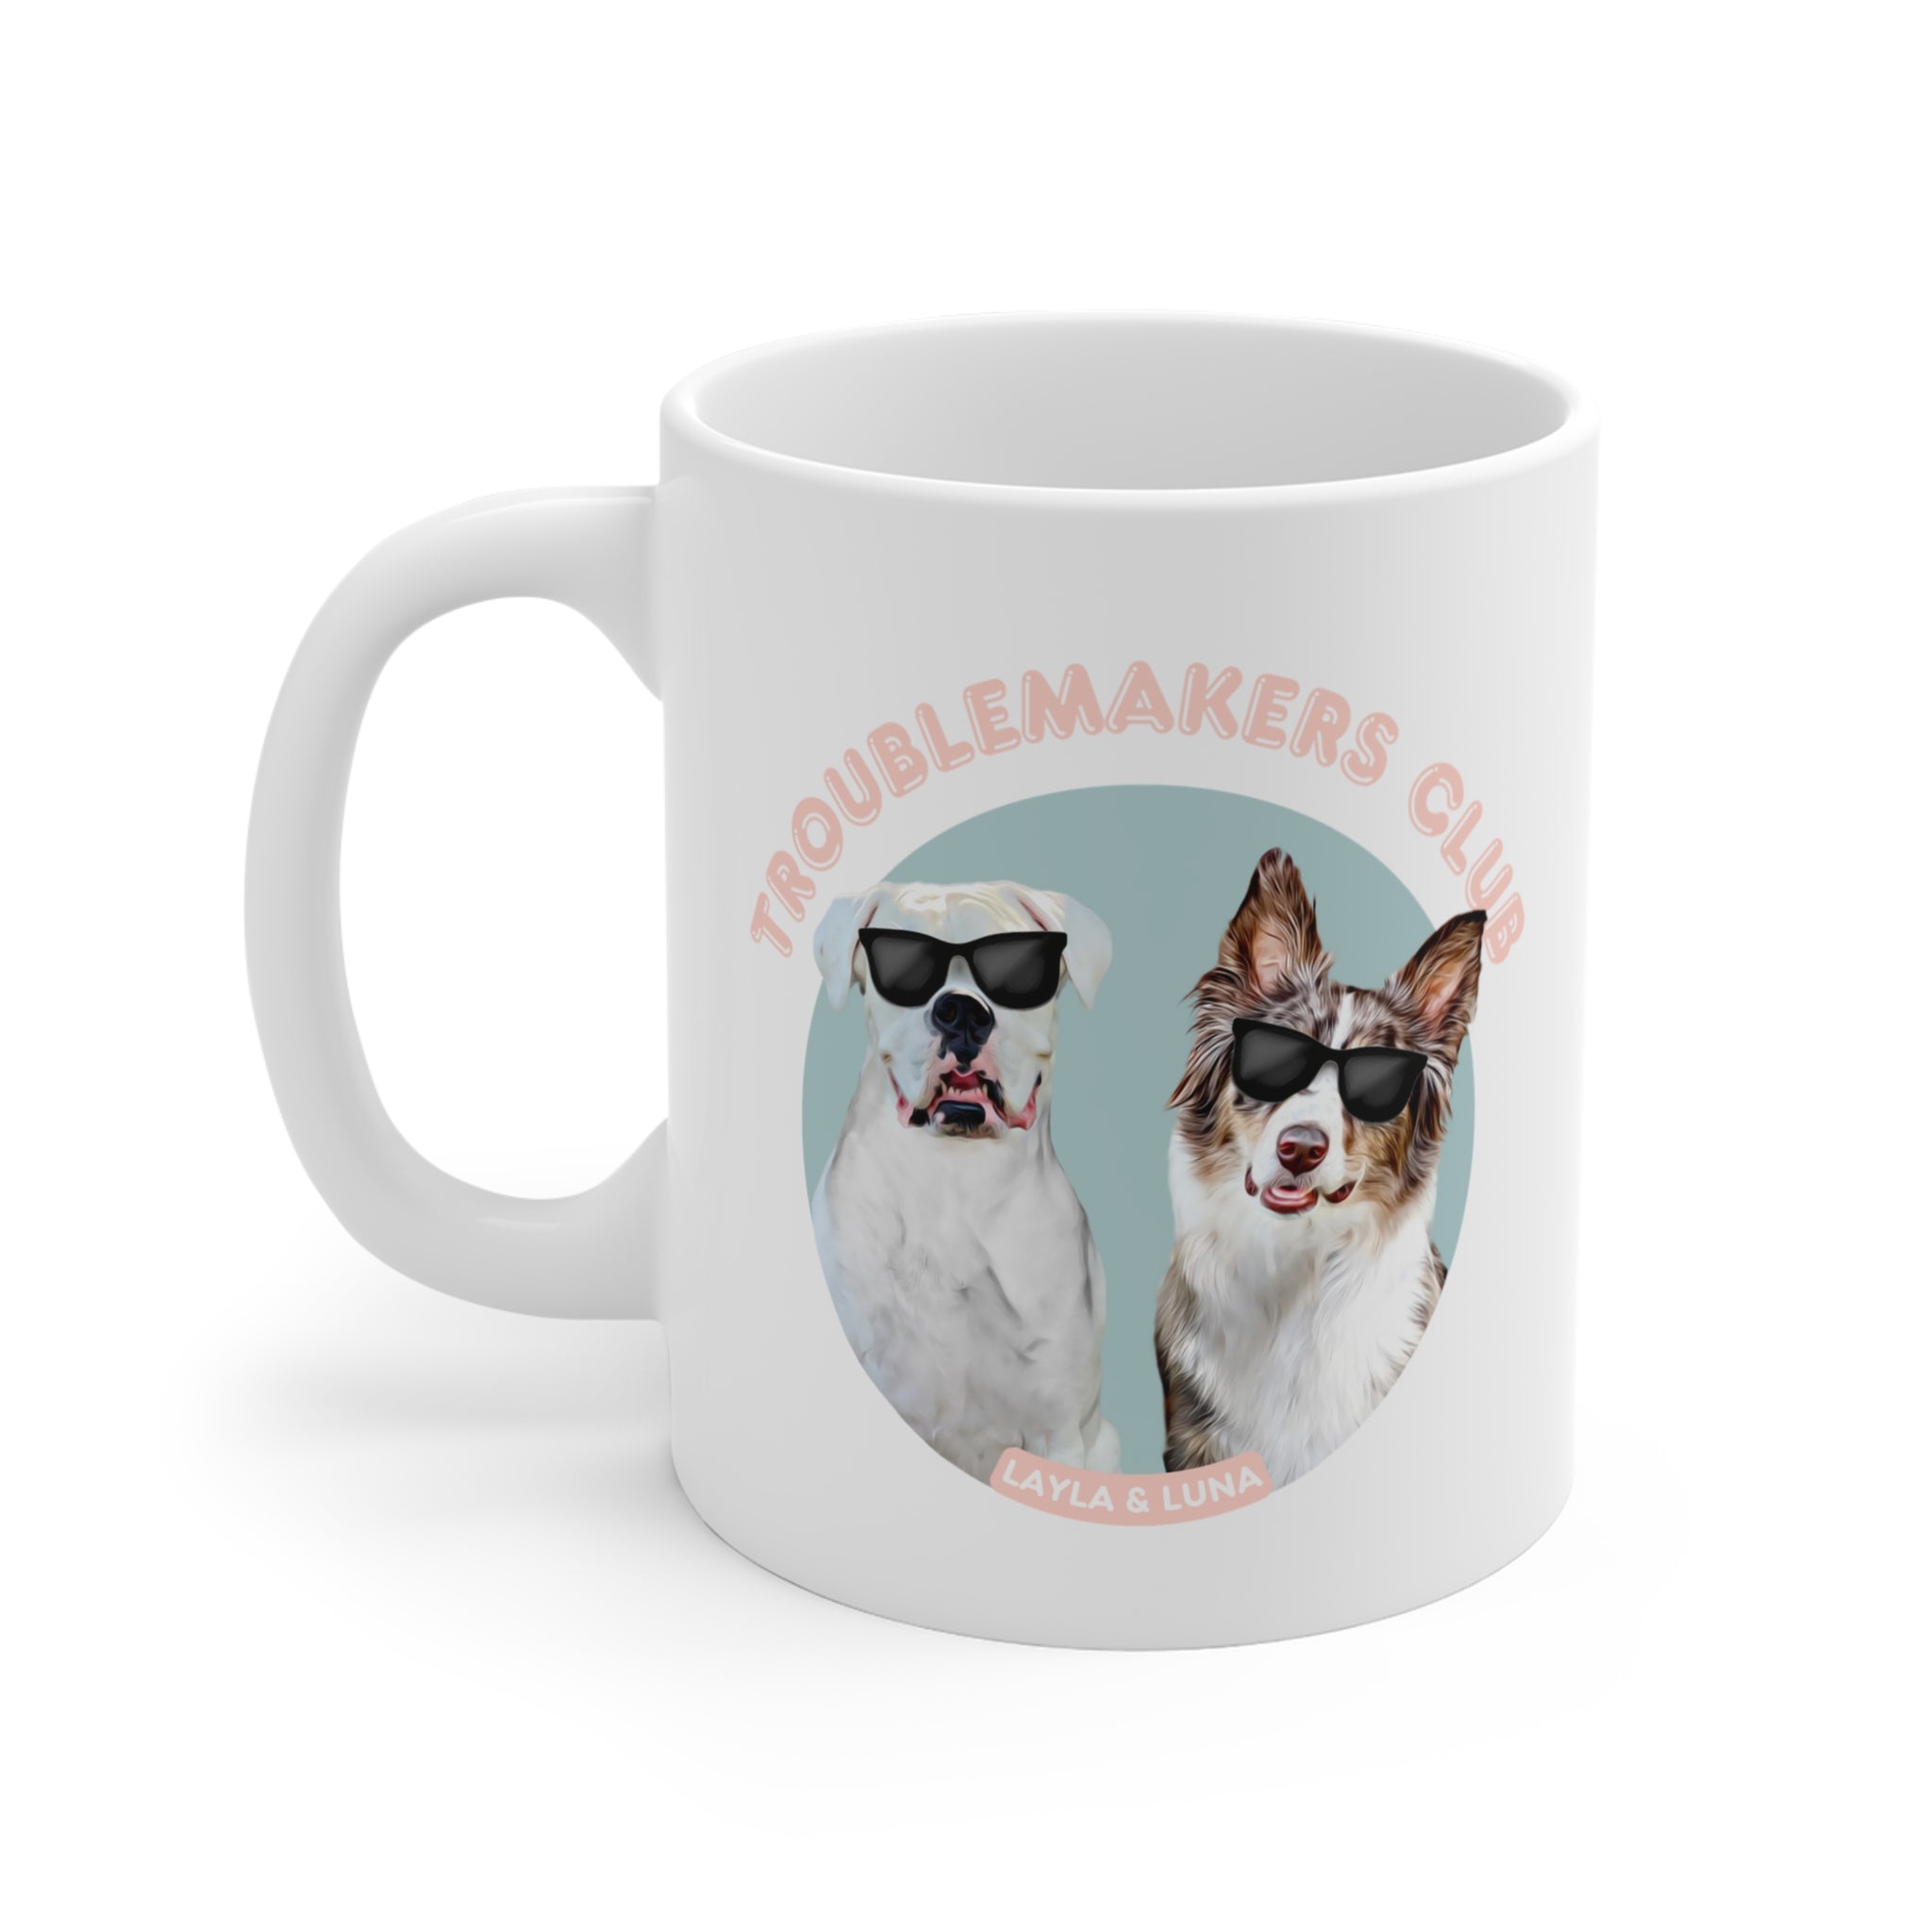 Troublemaker's Club Mug